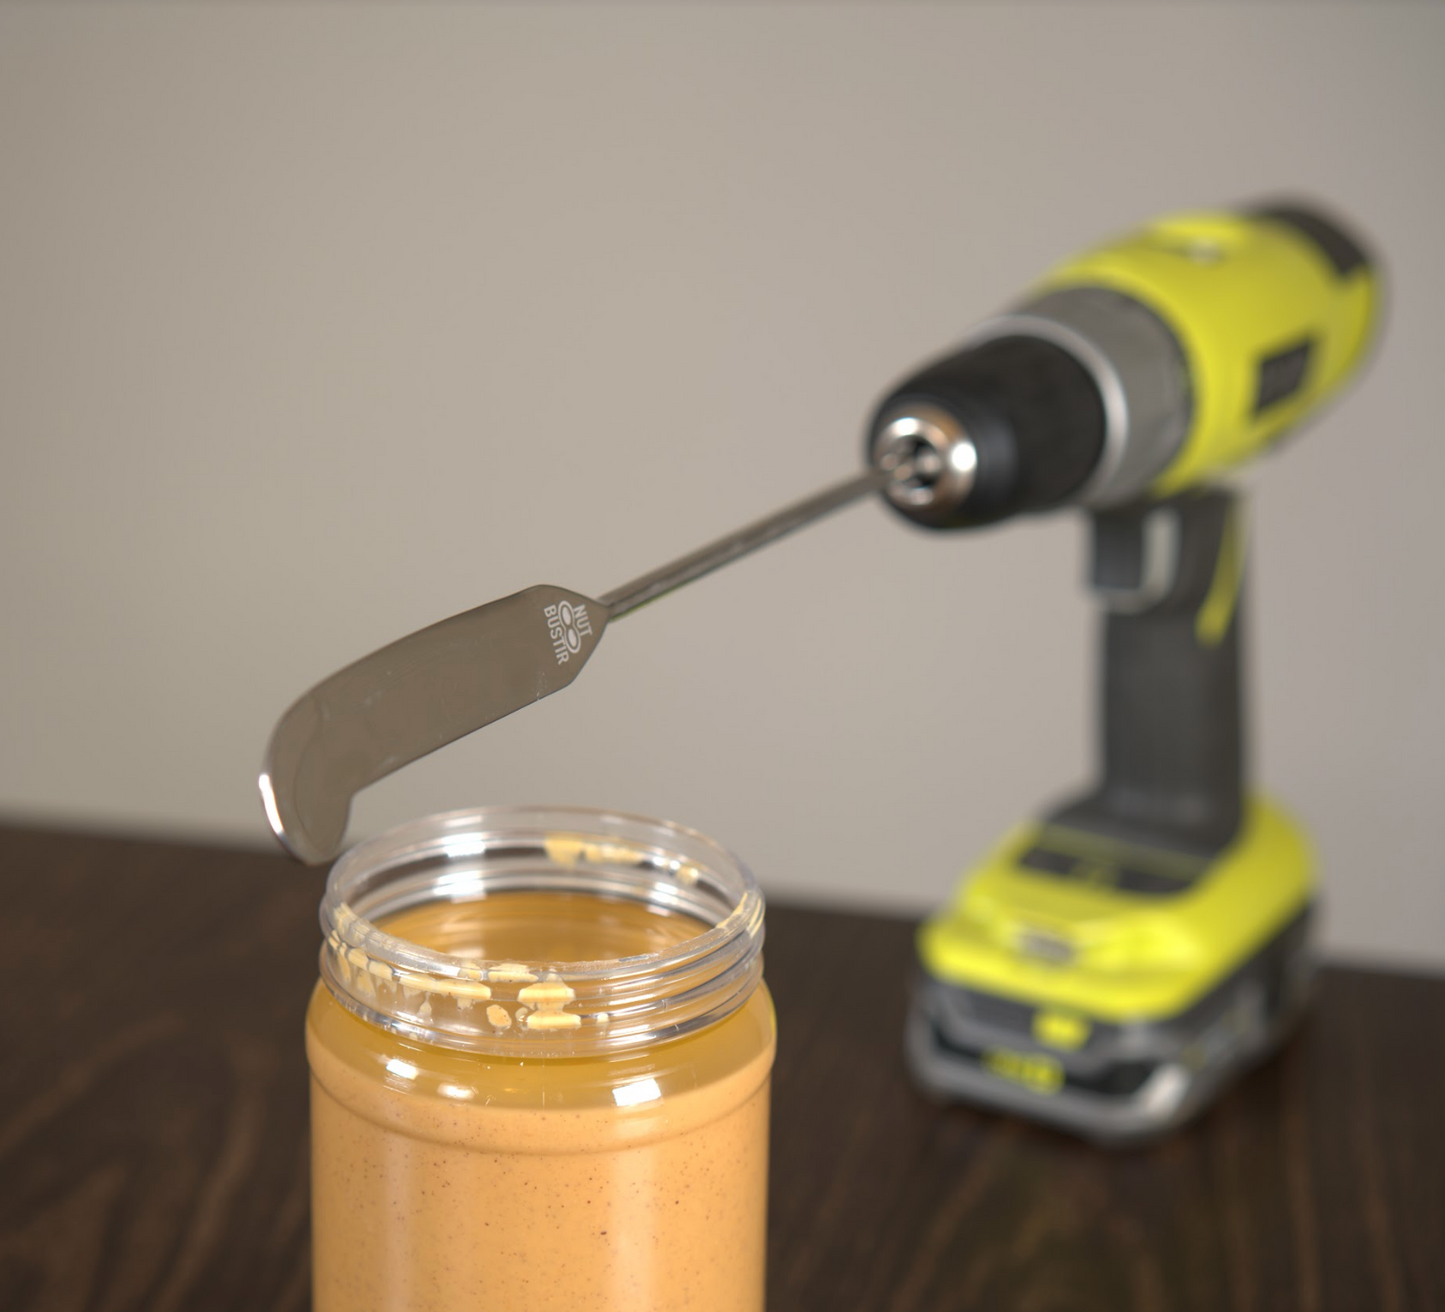 EZPB Natural Peanut Butter Stirrer - fits multiple size jars